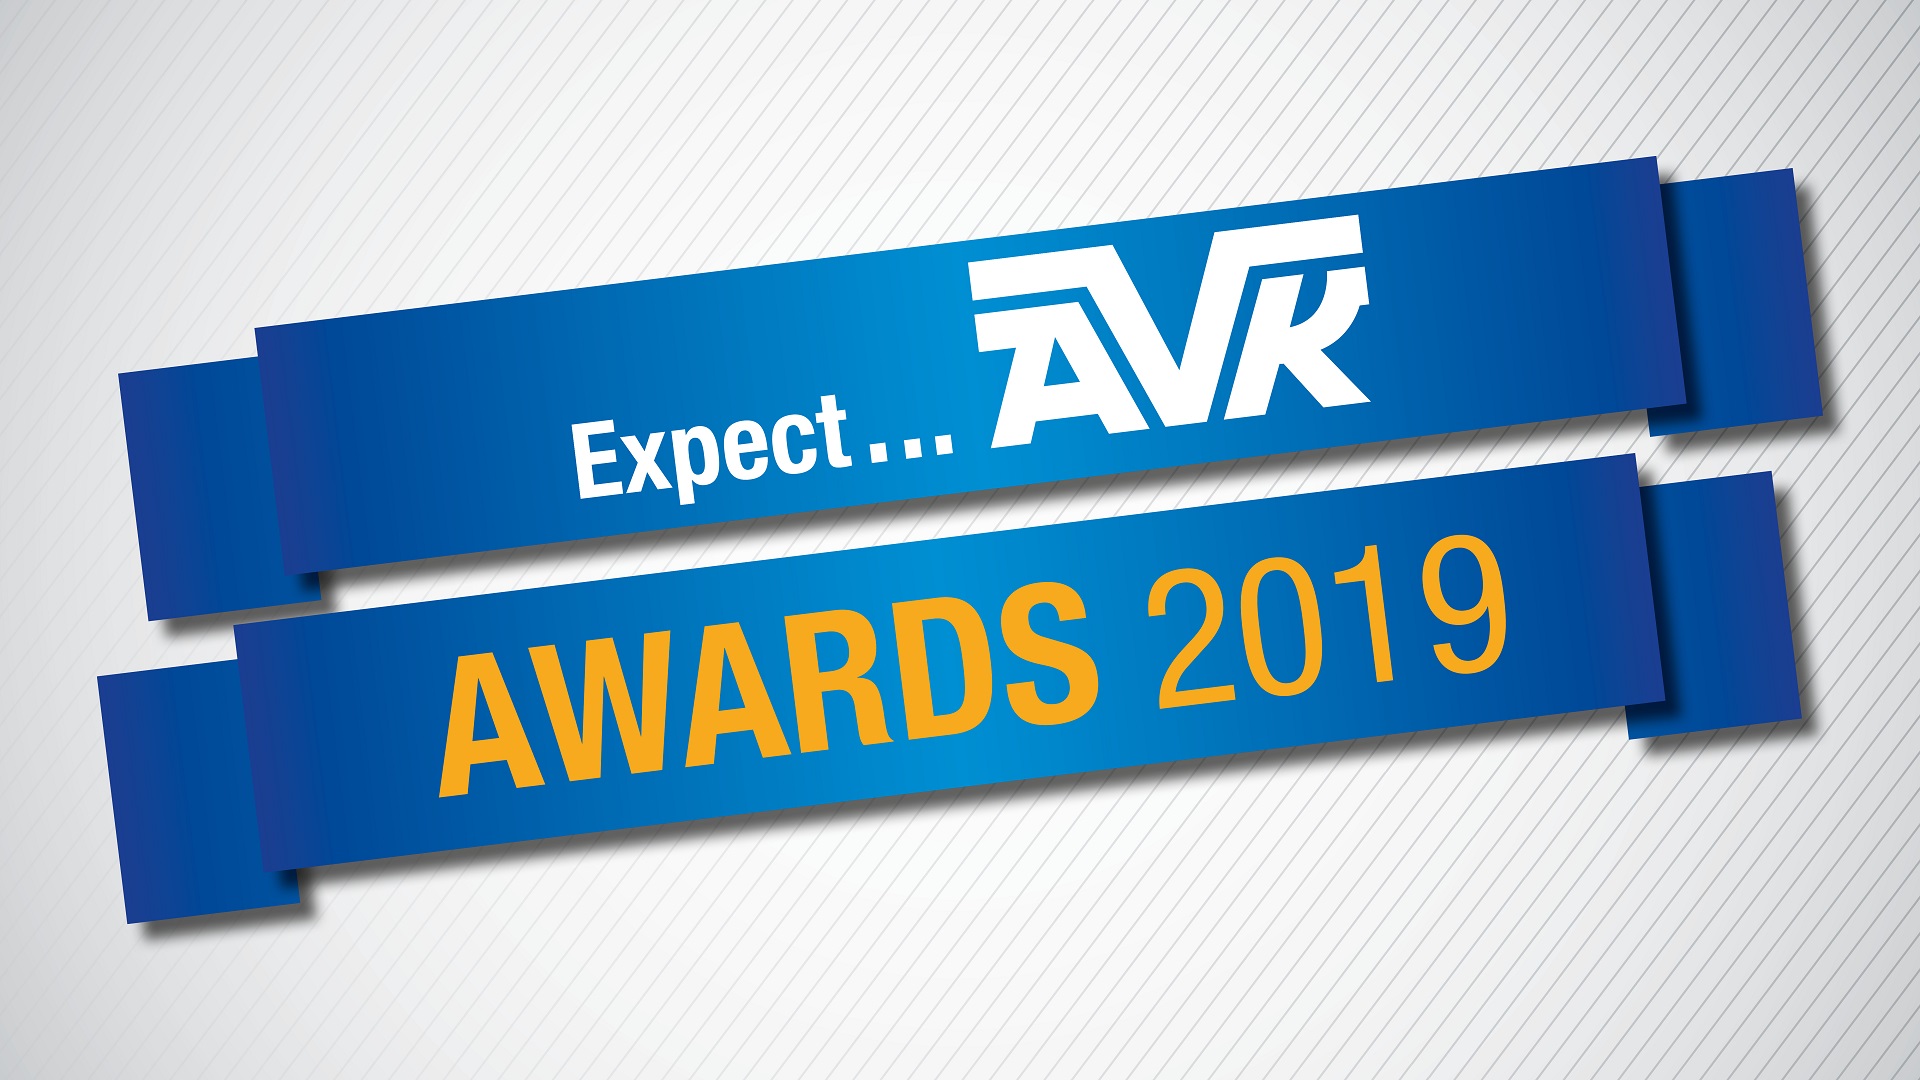 AVK Expect Awards 2019